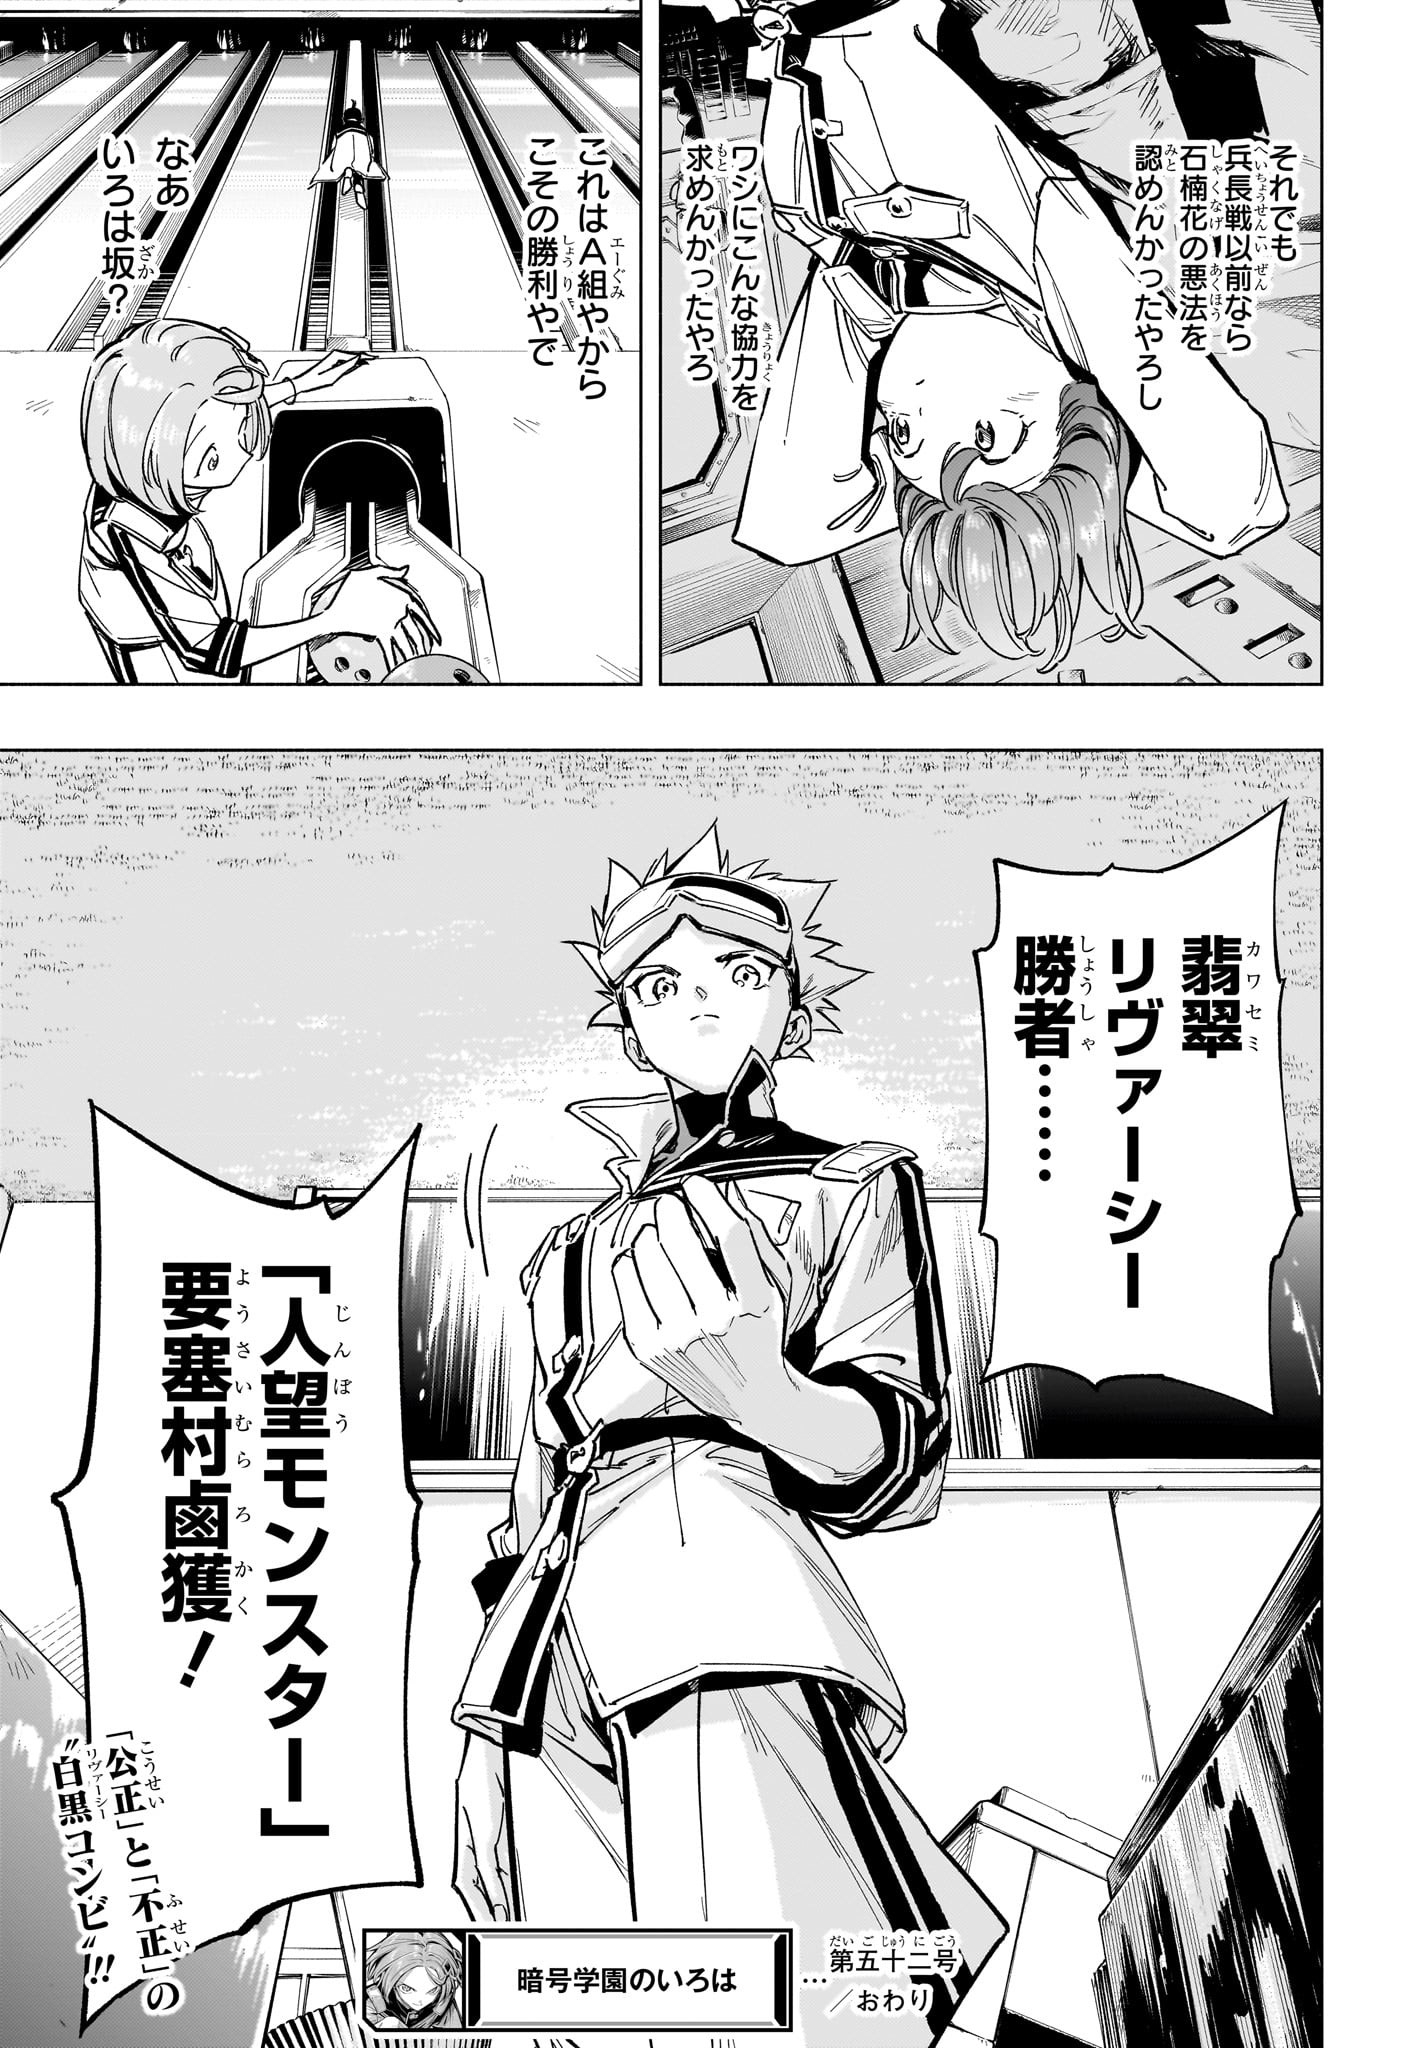 Angou Gakuen no Iroha - Chapter 52 - Page 19